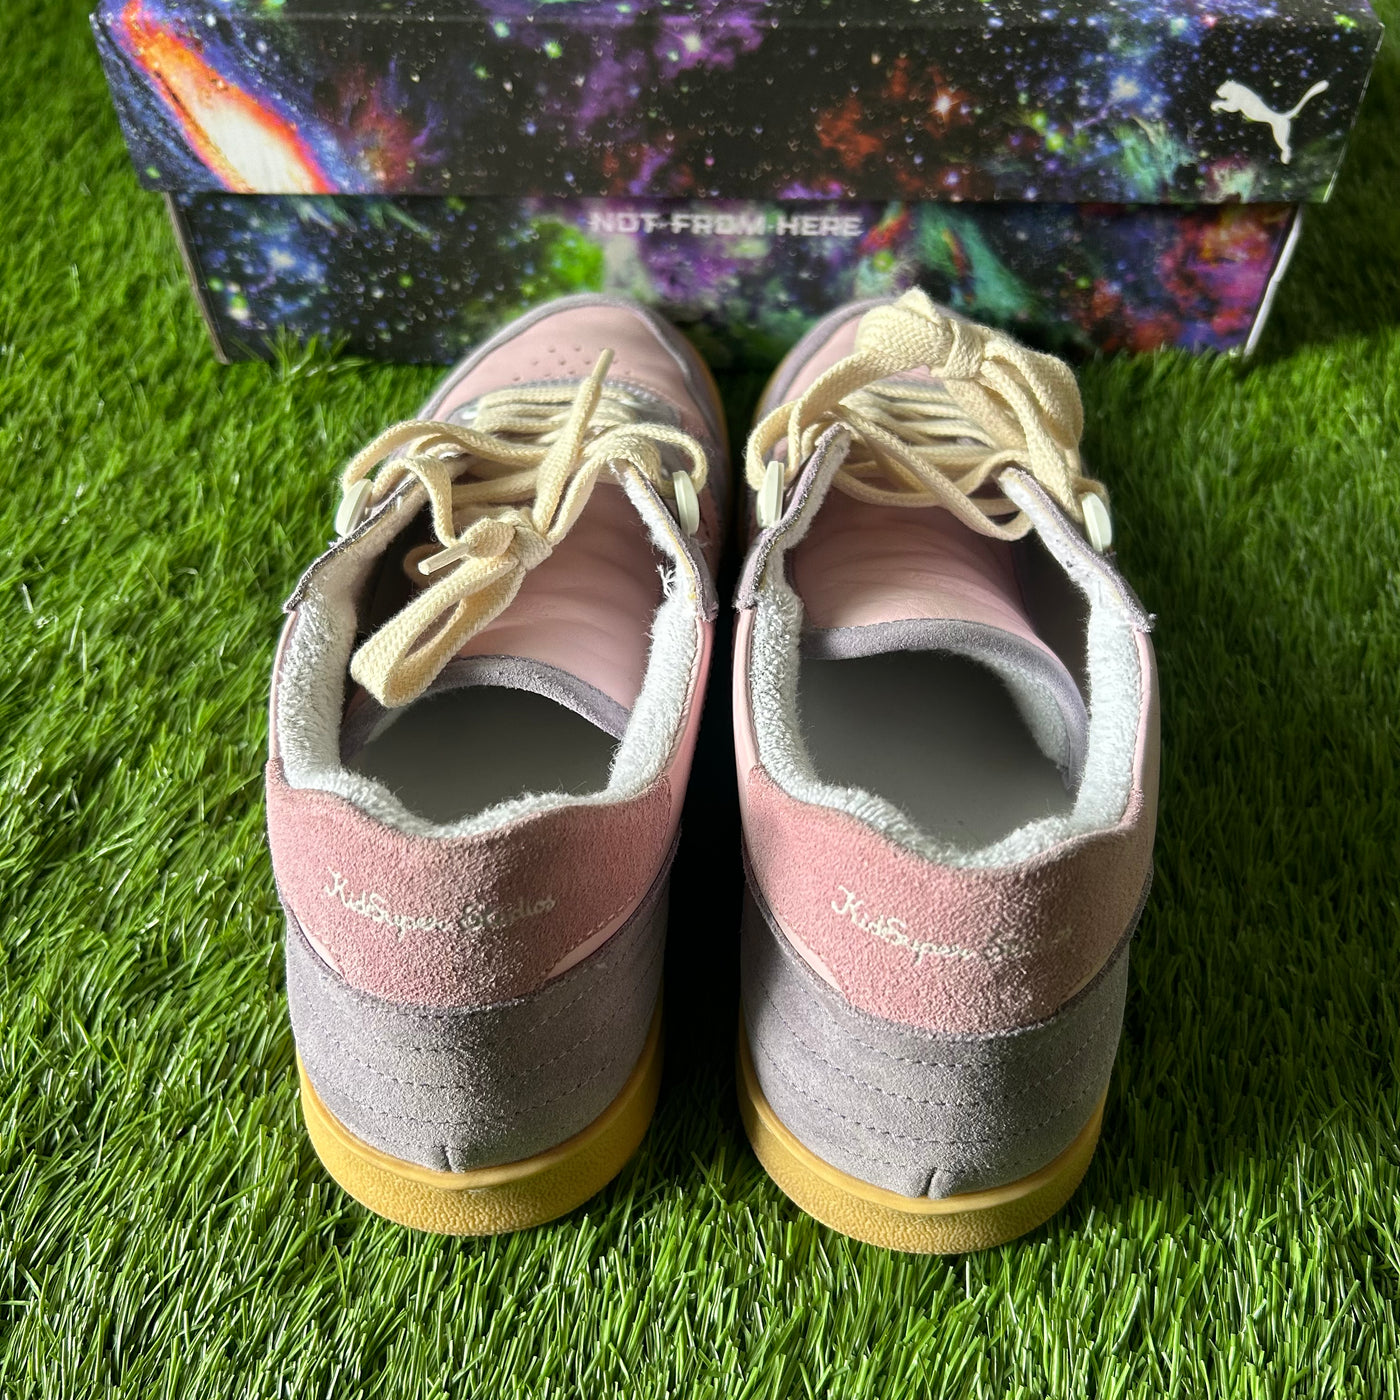 KidSuper Pantofola d’Oro Side Kick Sneakers